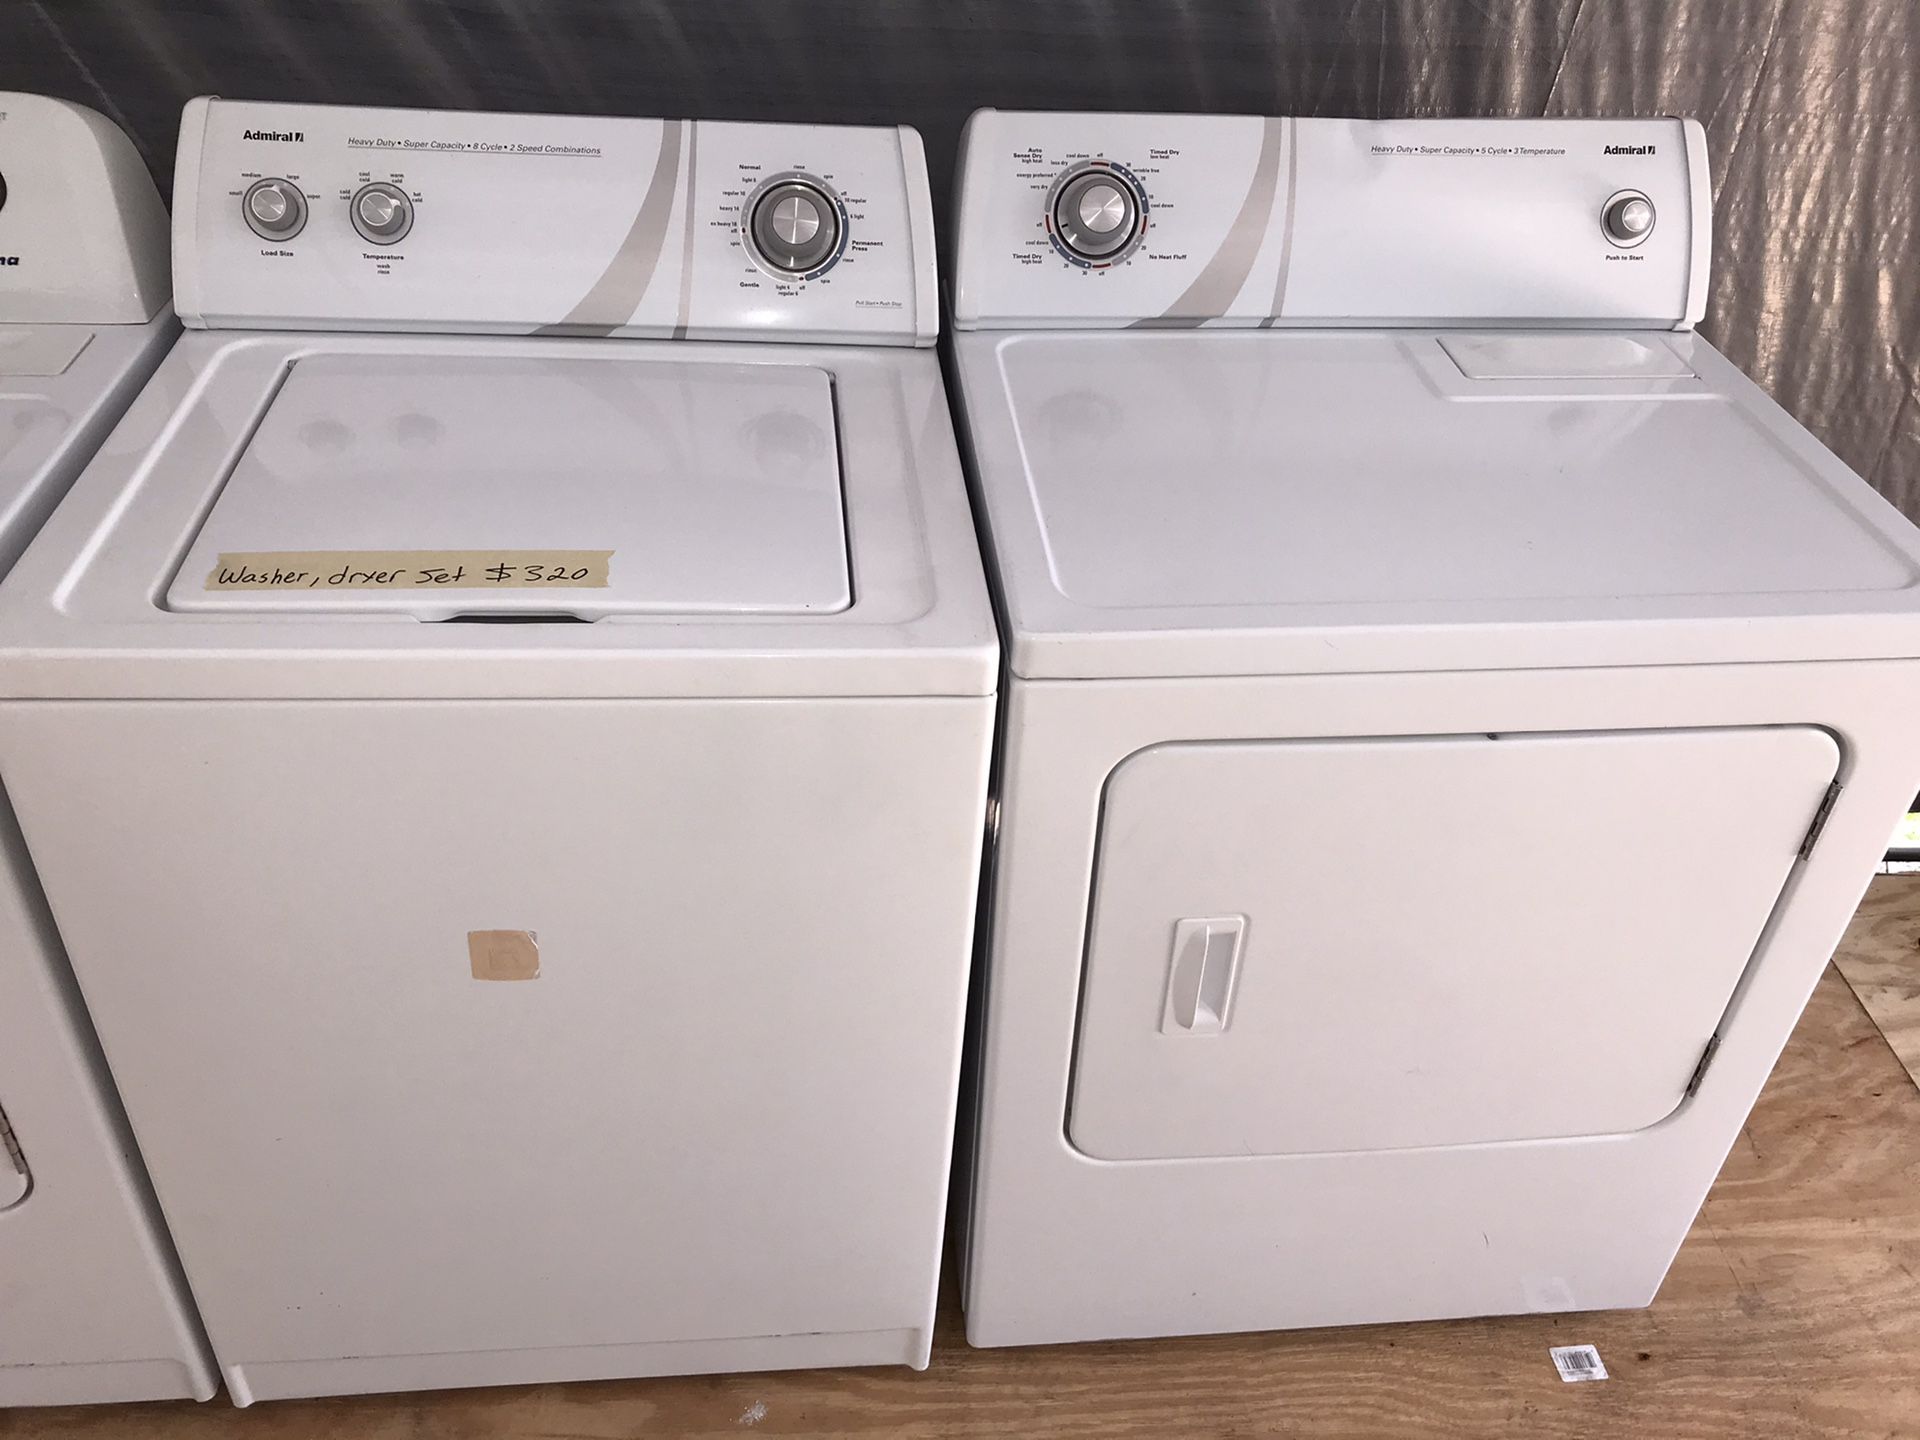 Admiral washer dryer set. In good condition!